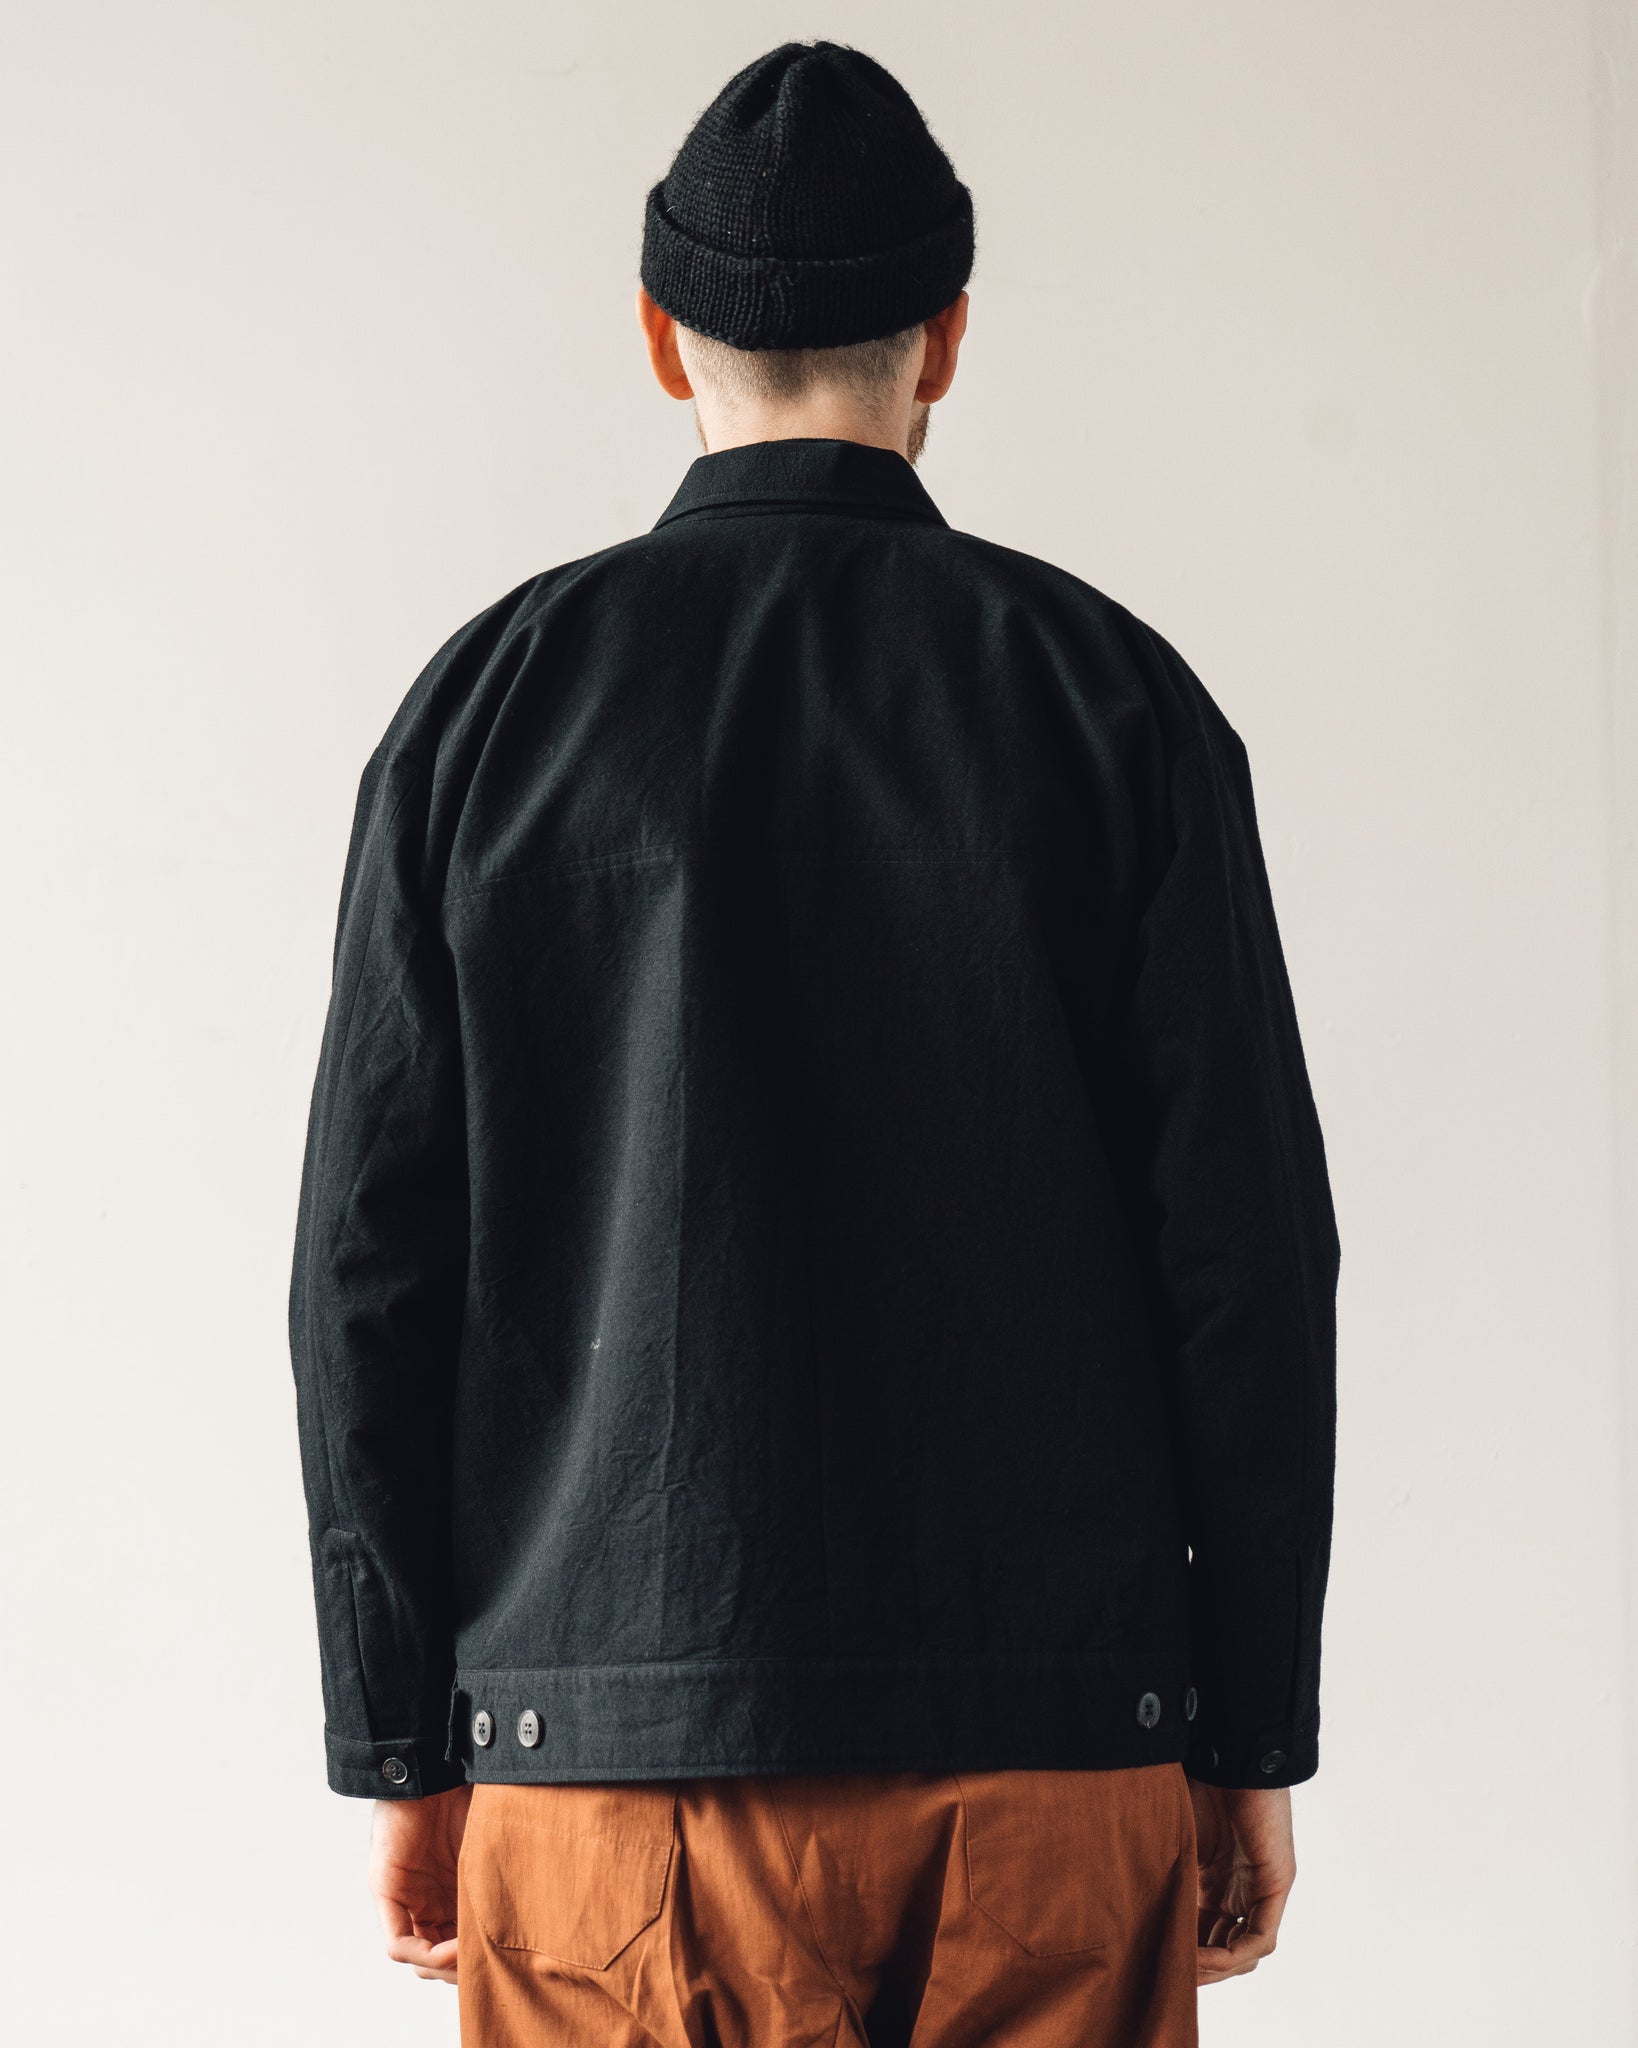 Jan-Jan Van Essche Jacket #34, Black Melange Cotton/Wool Canvas